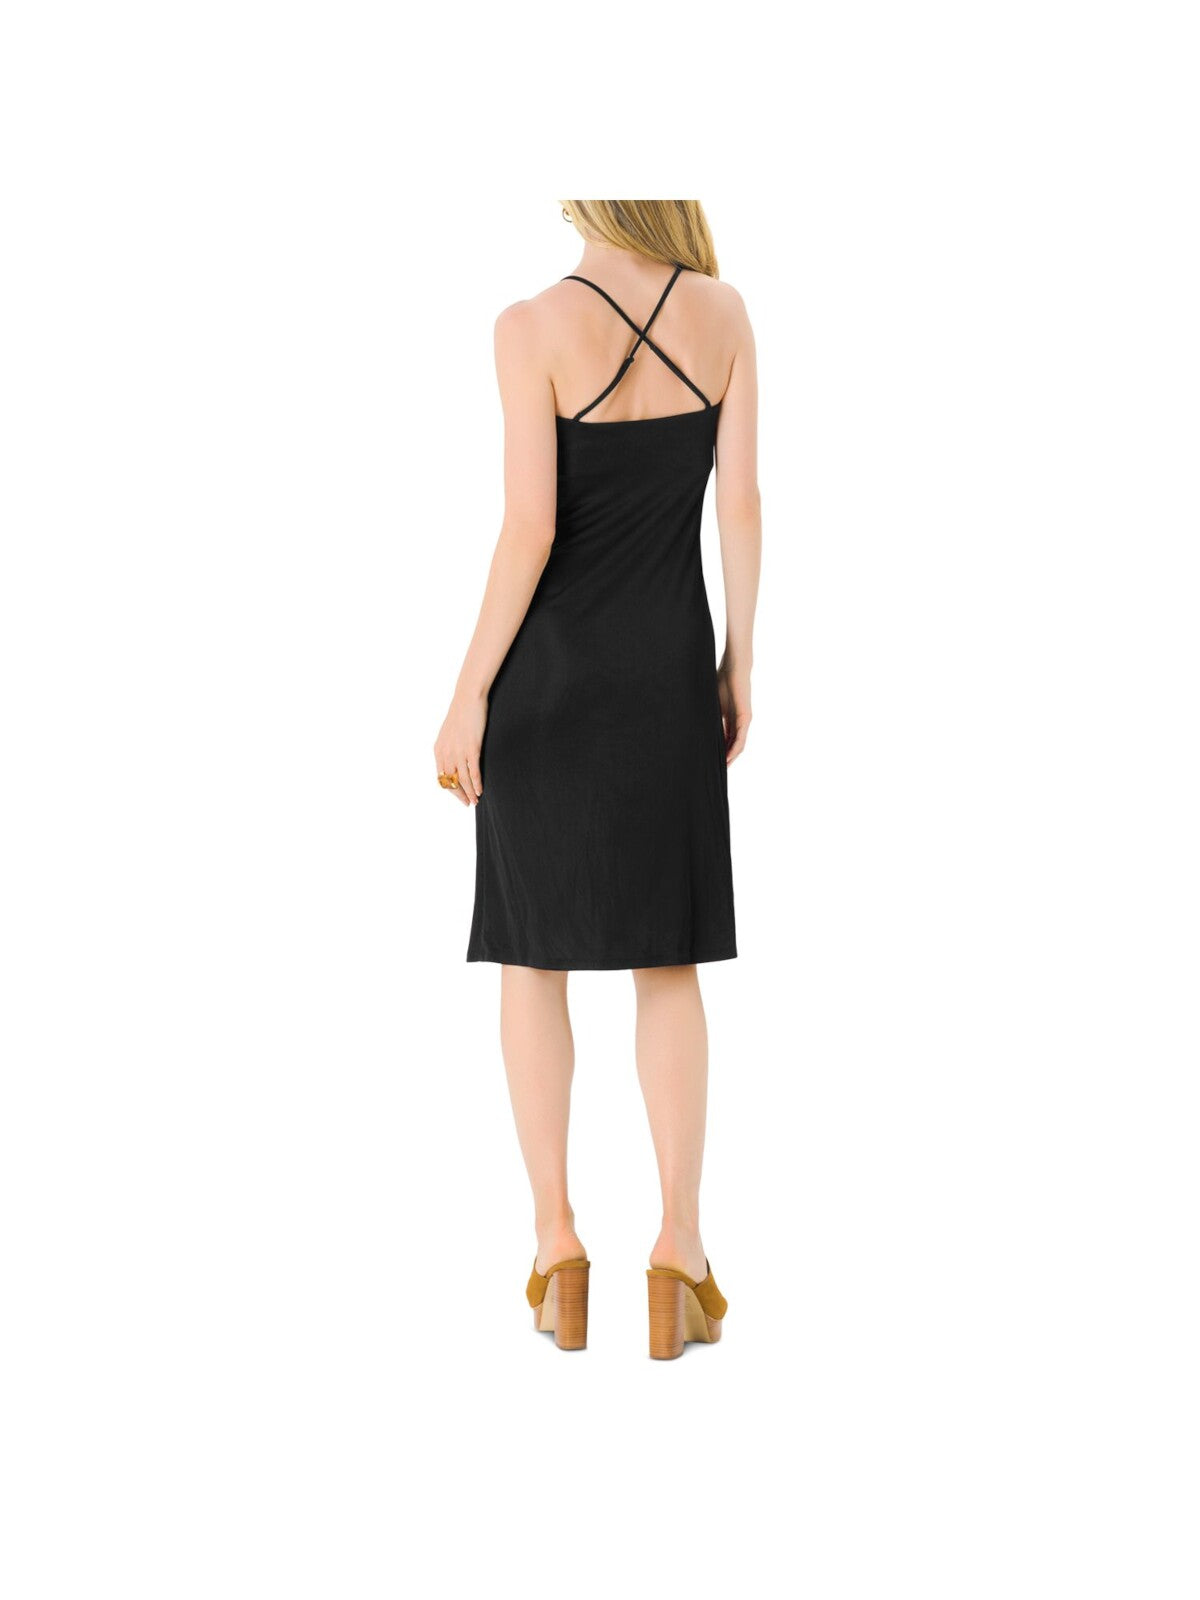 LEOTA Womens Black Stretch Ruched Adjustable Straps Spaghetti Strap V Neck Below The Knee Sheath Dress XL